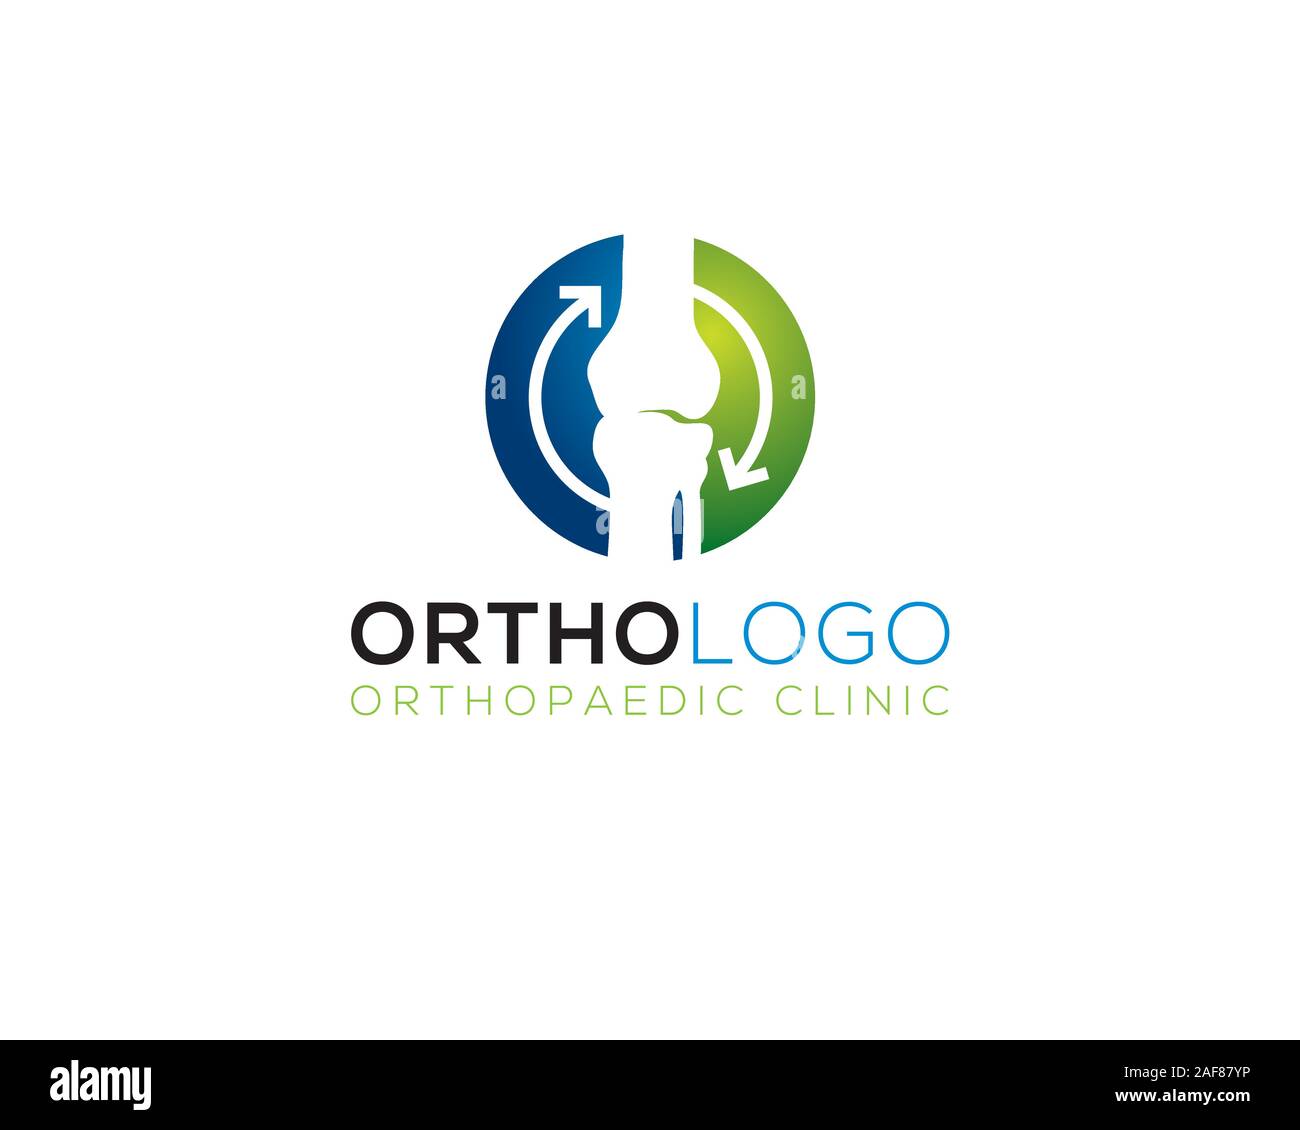 orthopedic human bone joint treatment diagnostic logo Stock Vector